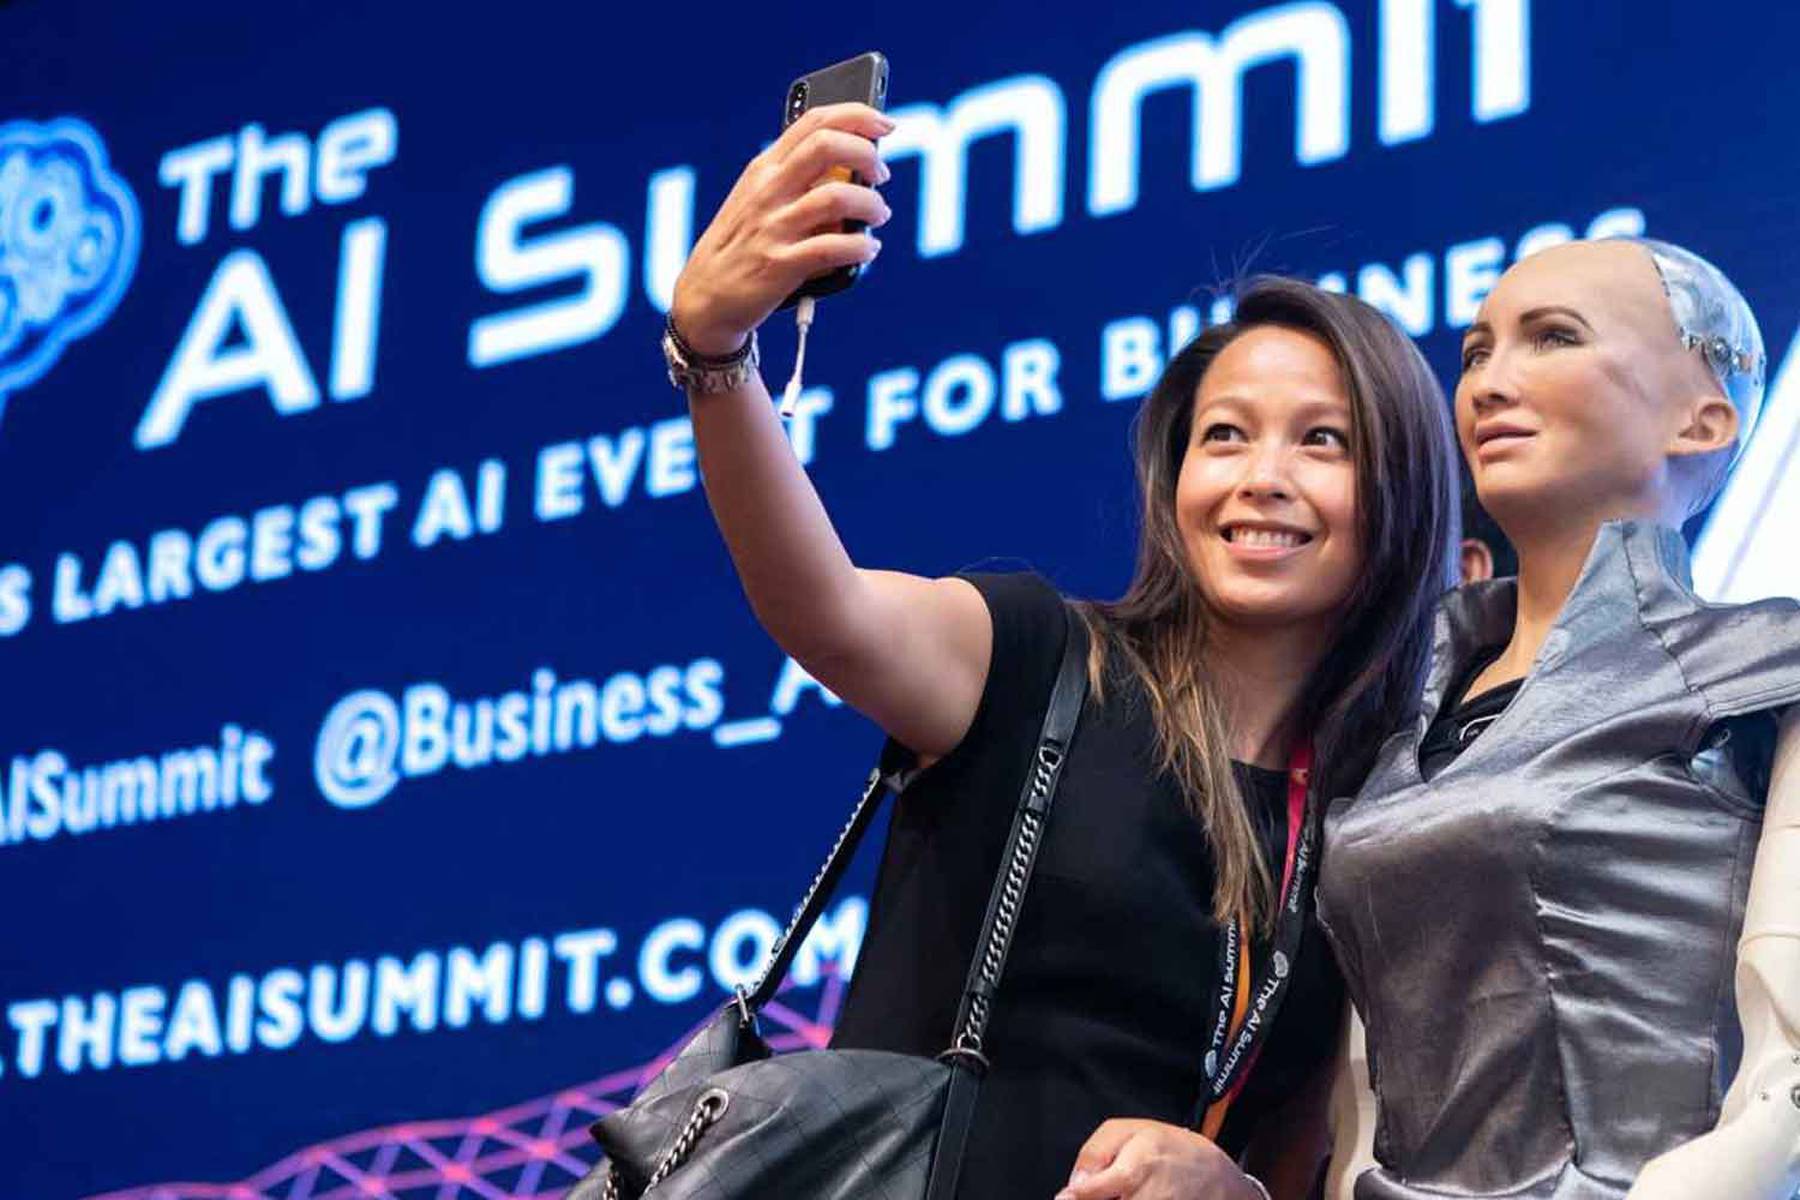 The AI Summit New York AI & ML Events